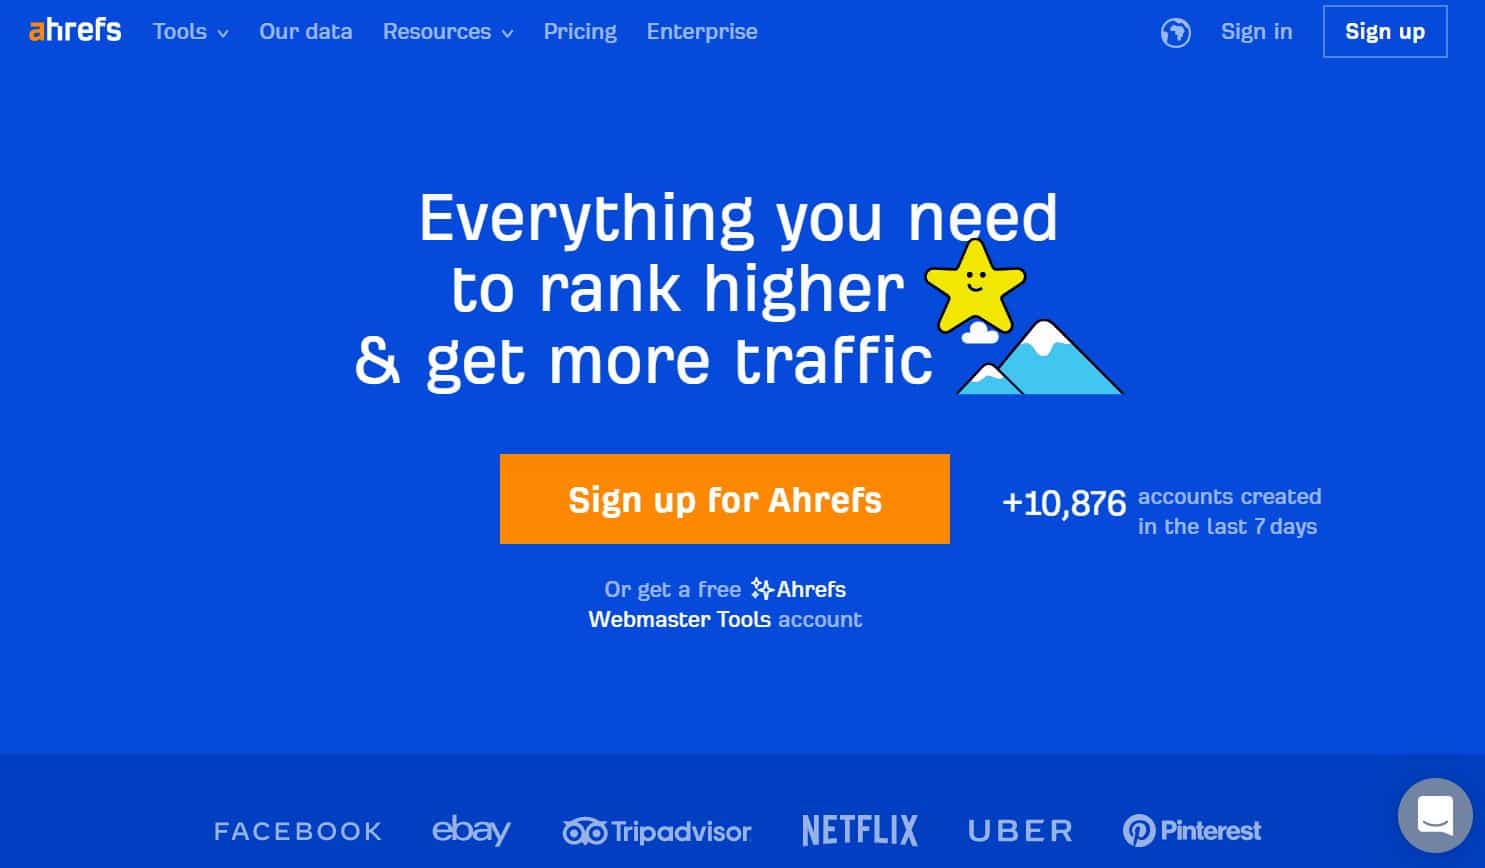 De Ahrefs startpagina met de slogan "Everything you need to rank higher & get more traffic".